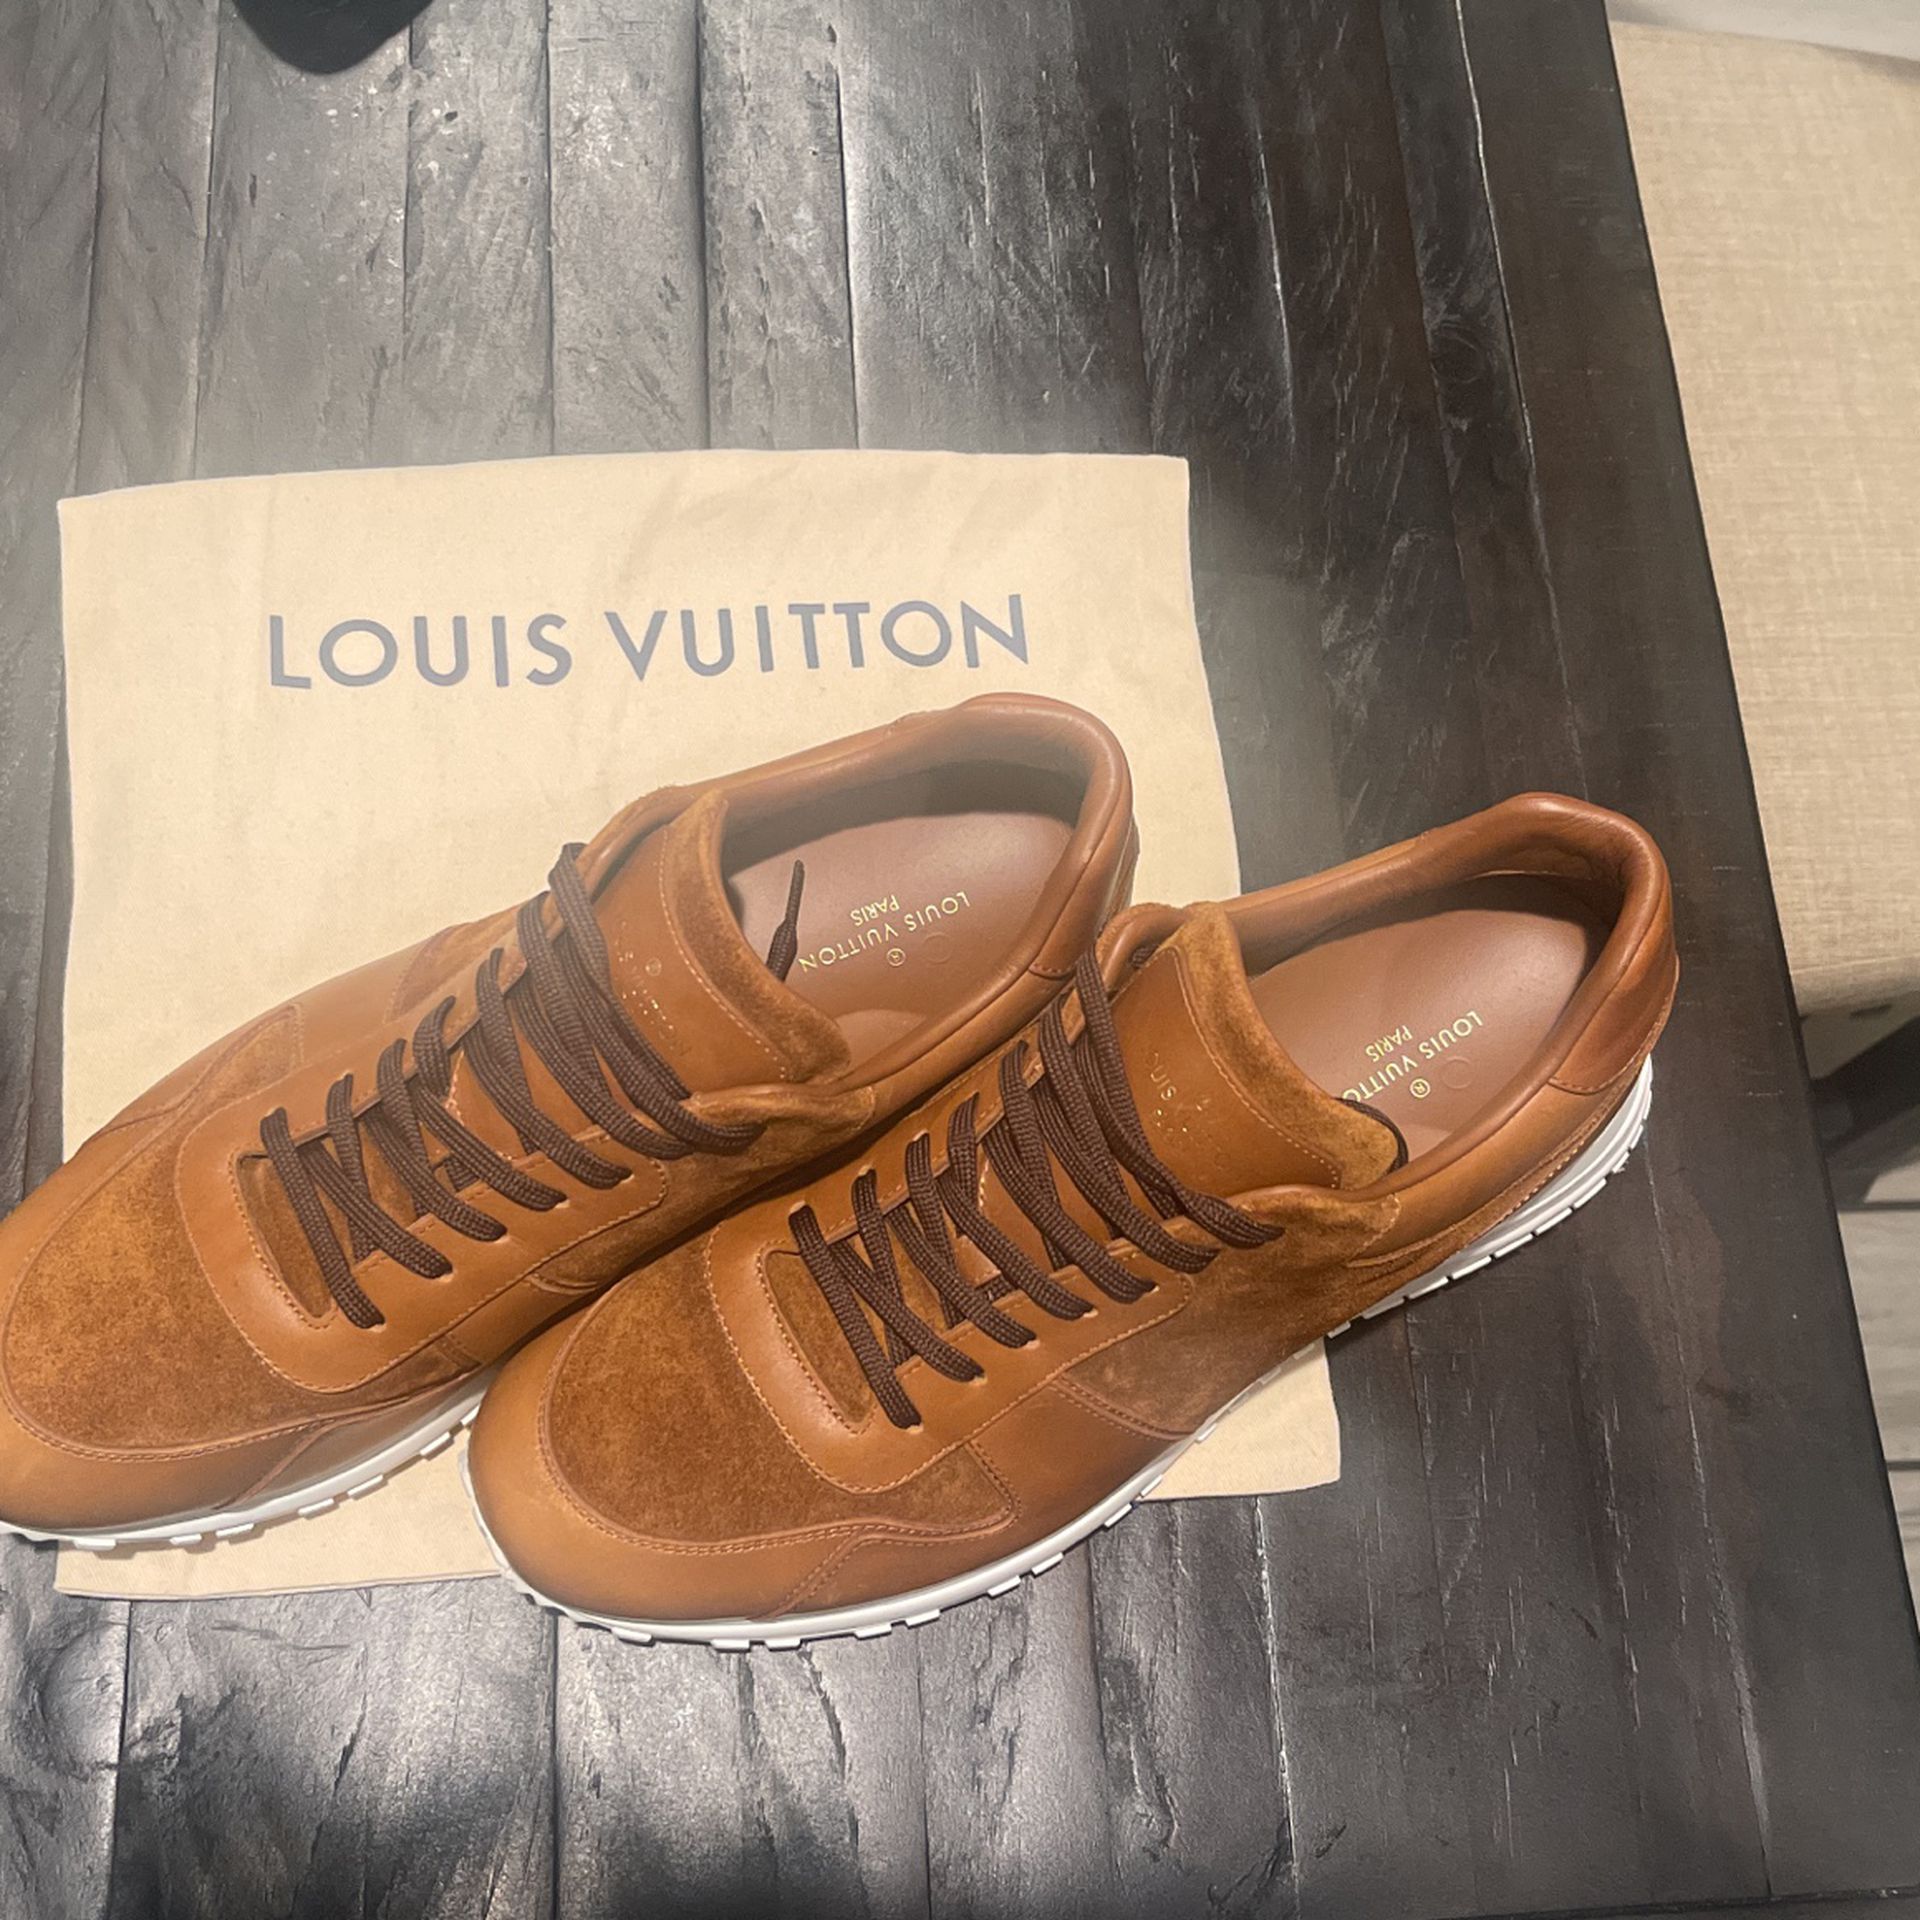 LV “Louis Vuitton” runaway sneakers for Sale in Los Angeles, CA